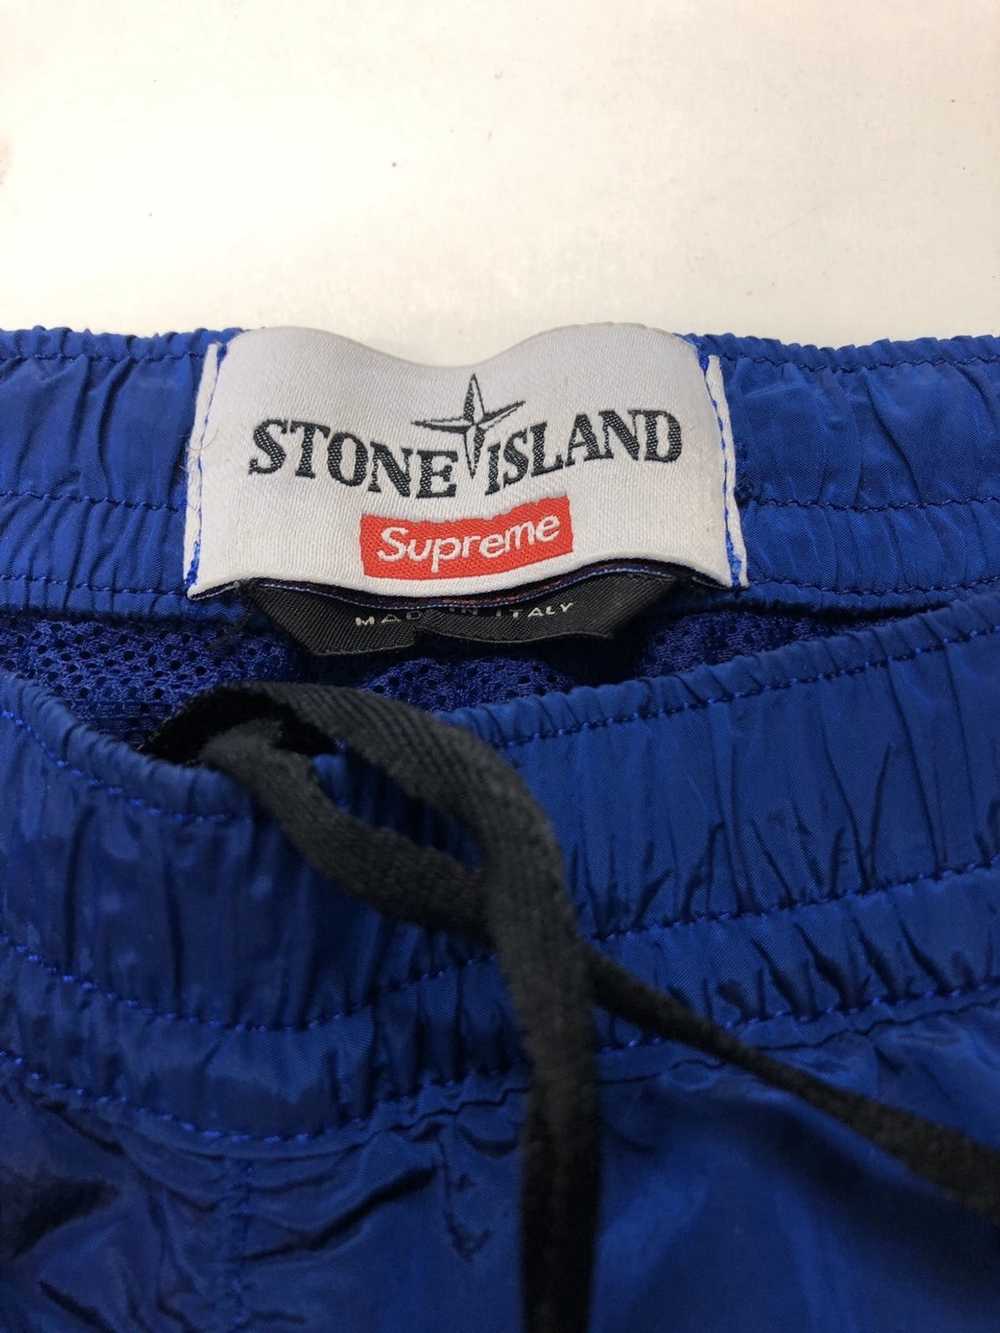 Stone Island × Supreme SS16 Nylon Metal Track Pant - image 4